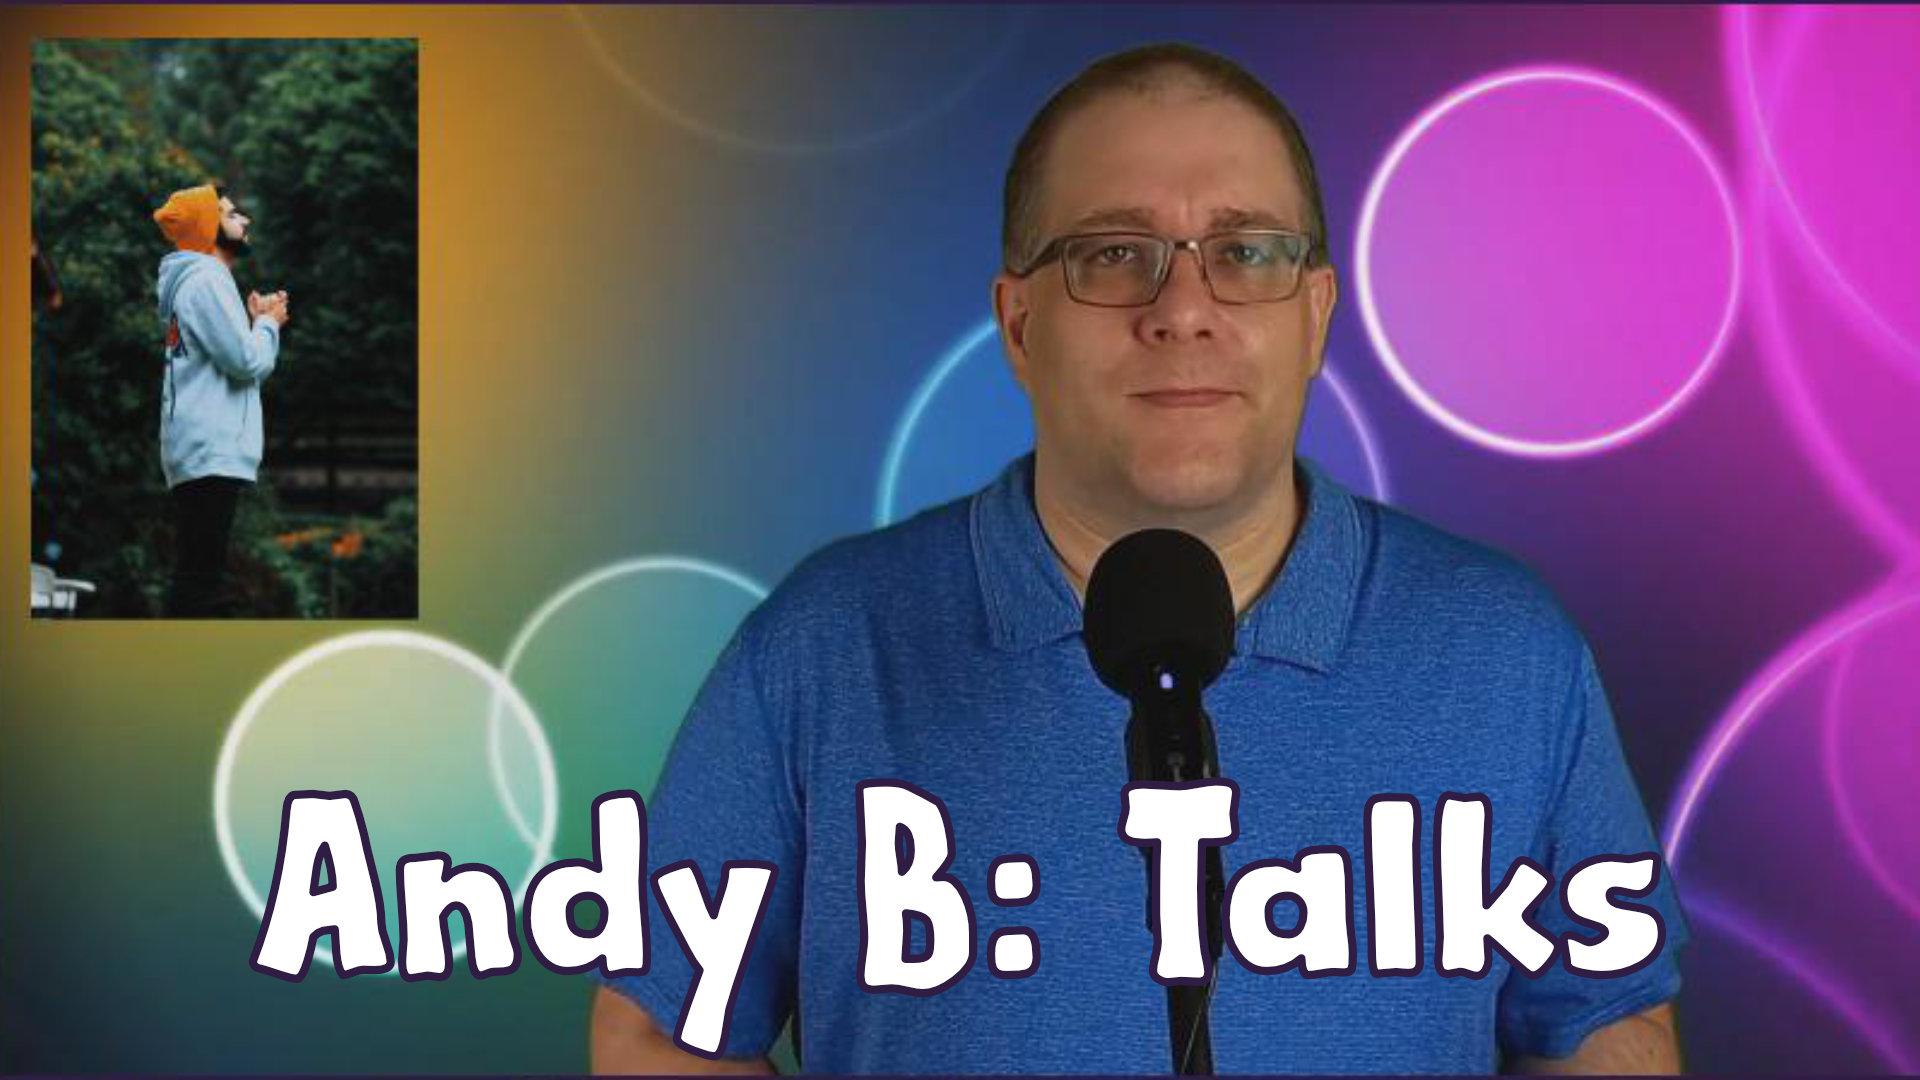 Andy B talks thumbnail